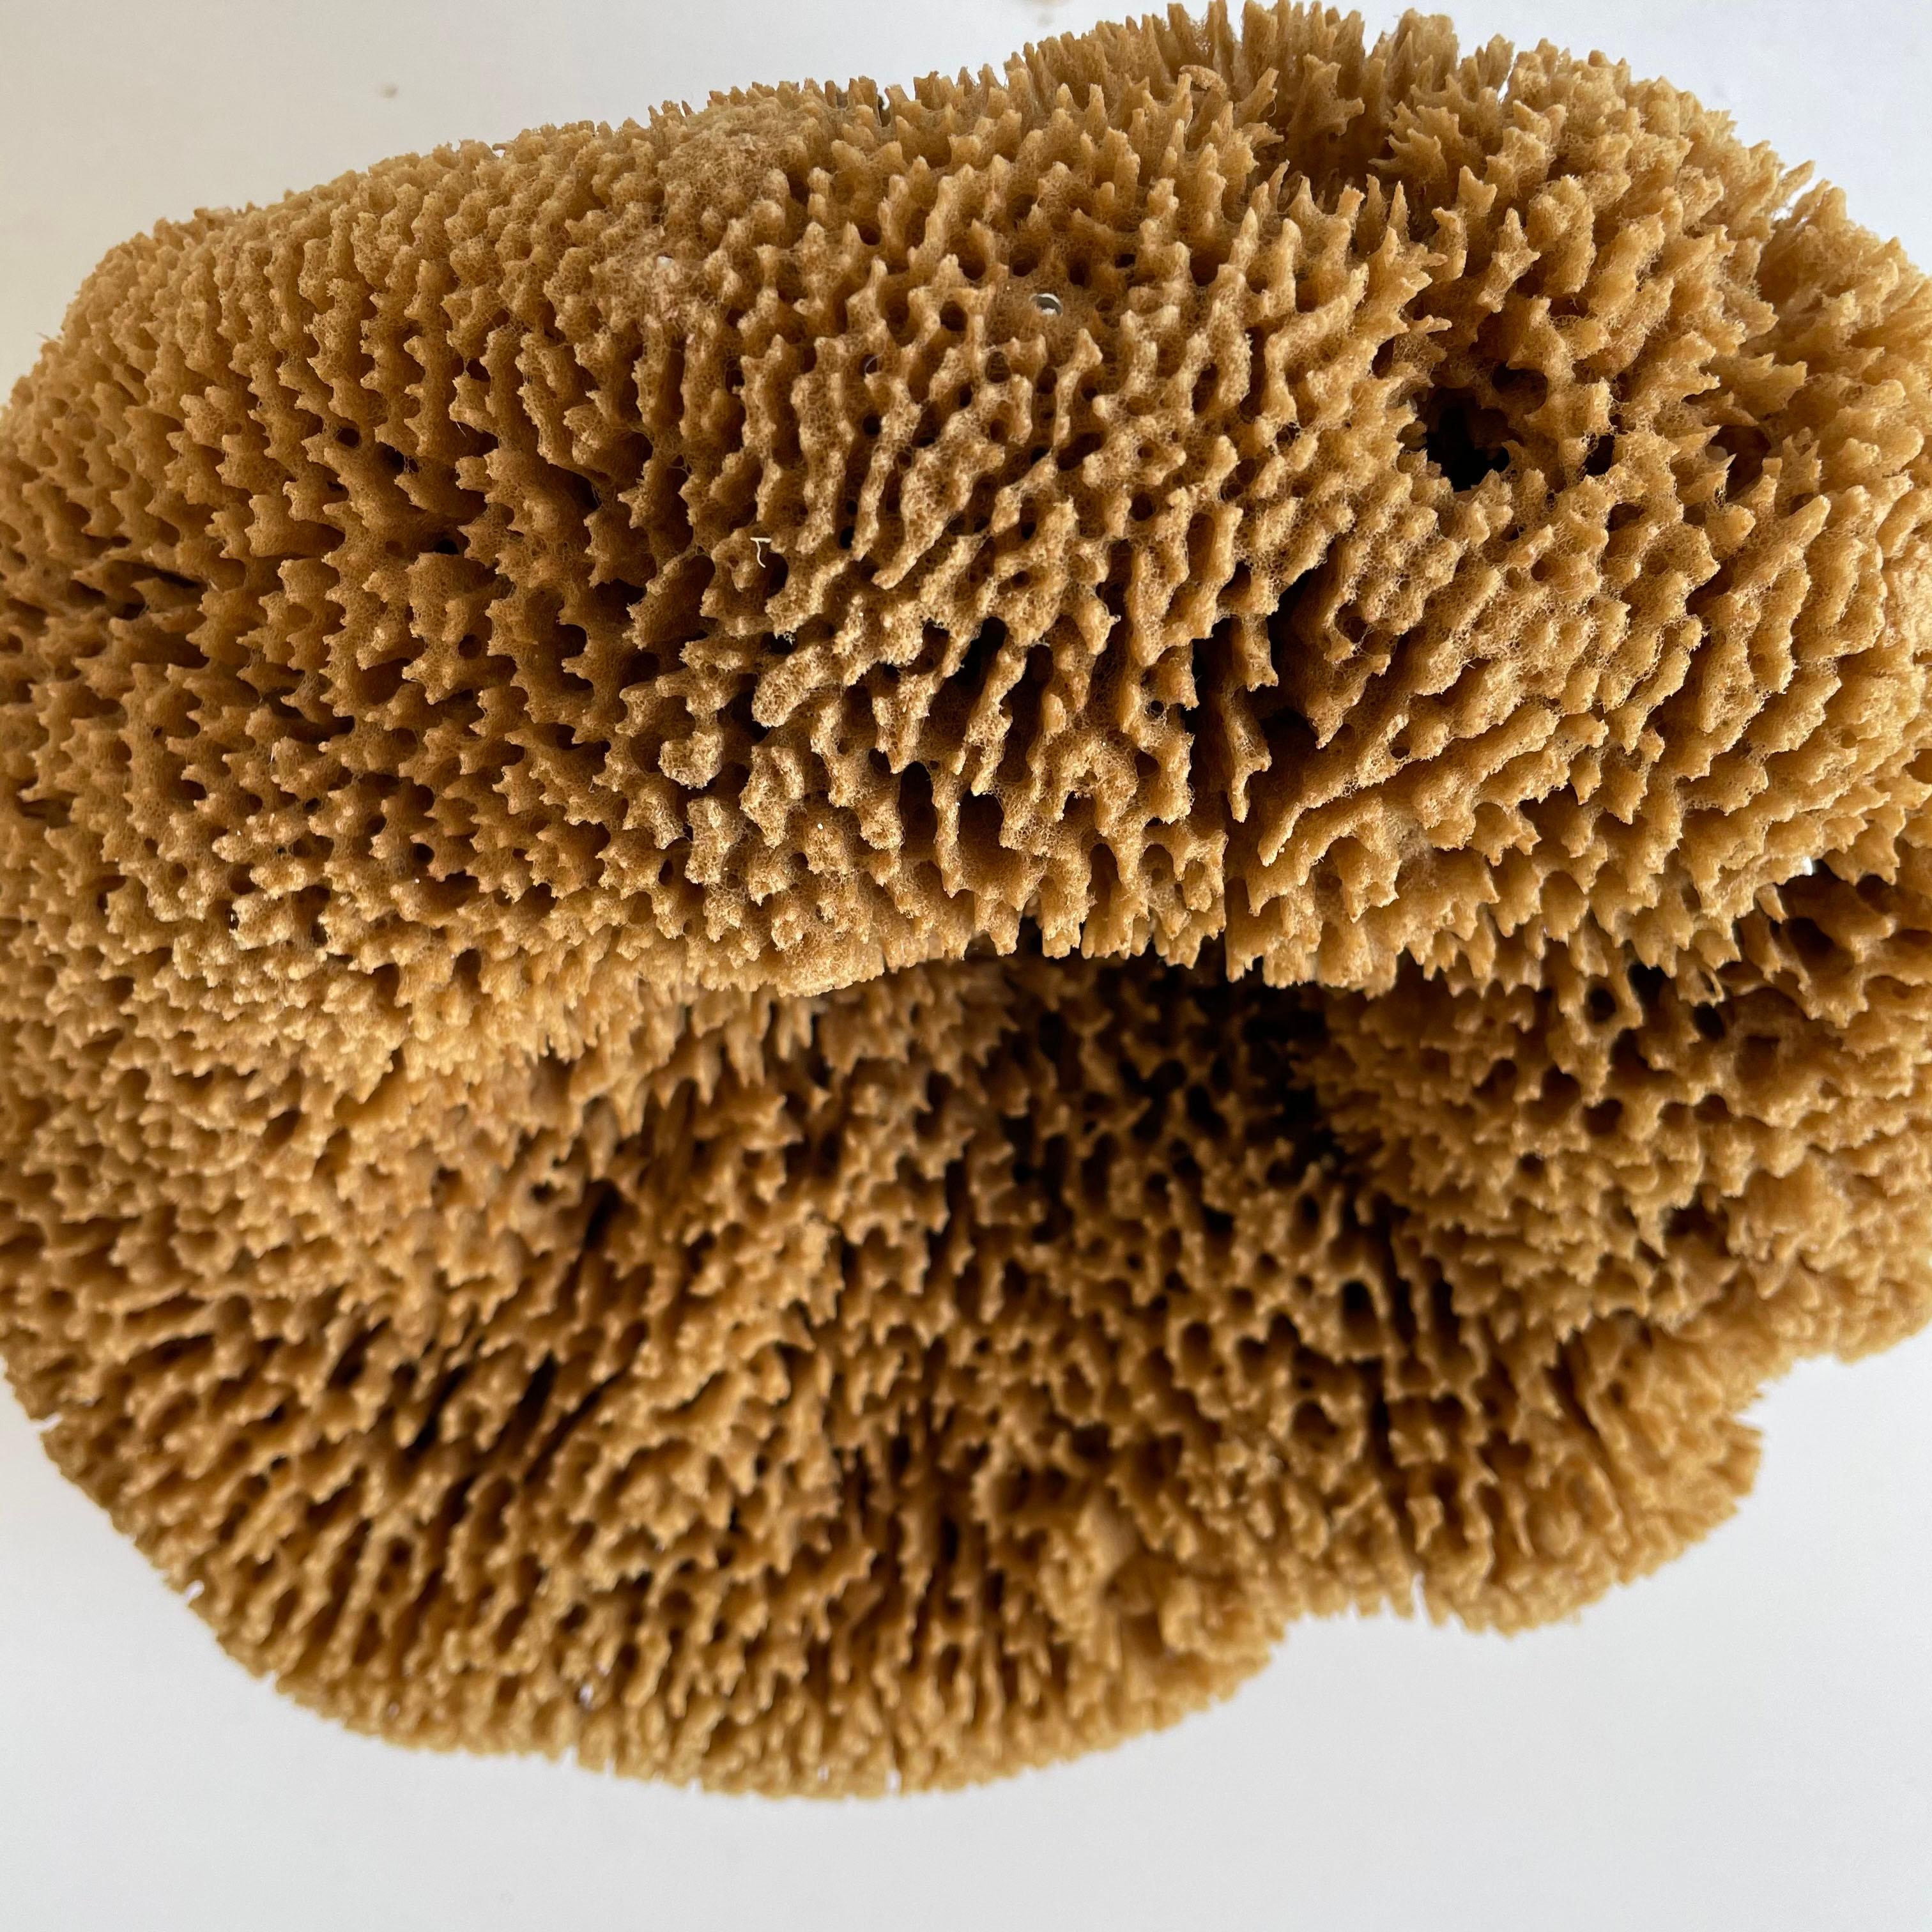 Natural beautiful shaped natural sea sponge
Size 9” x 8” x 5.5”.

 